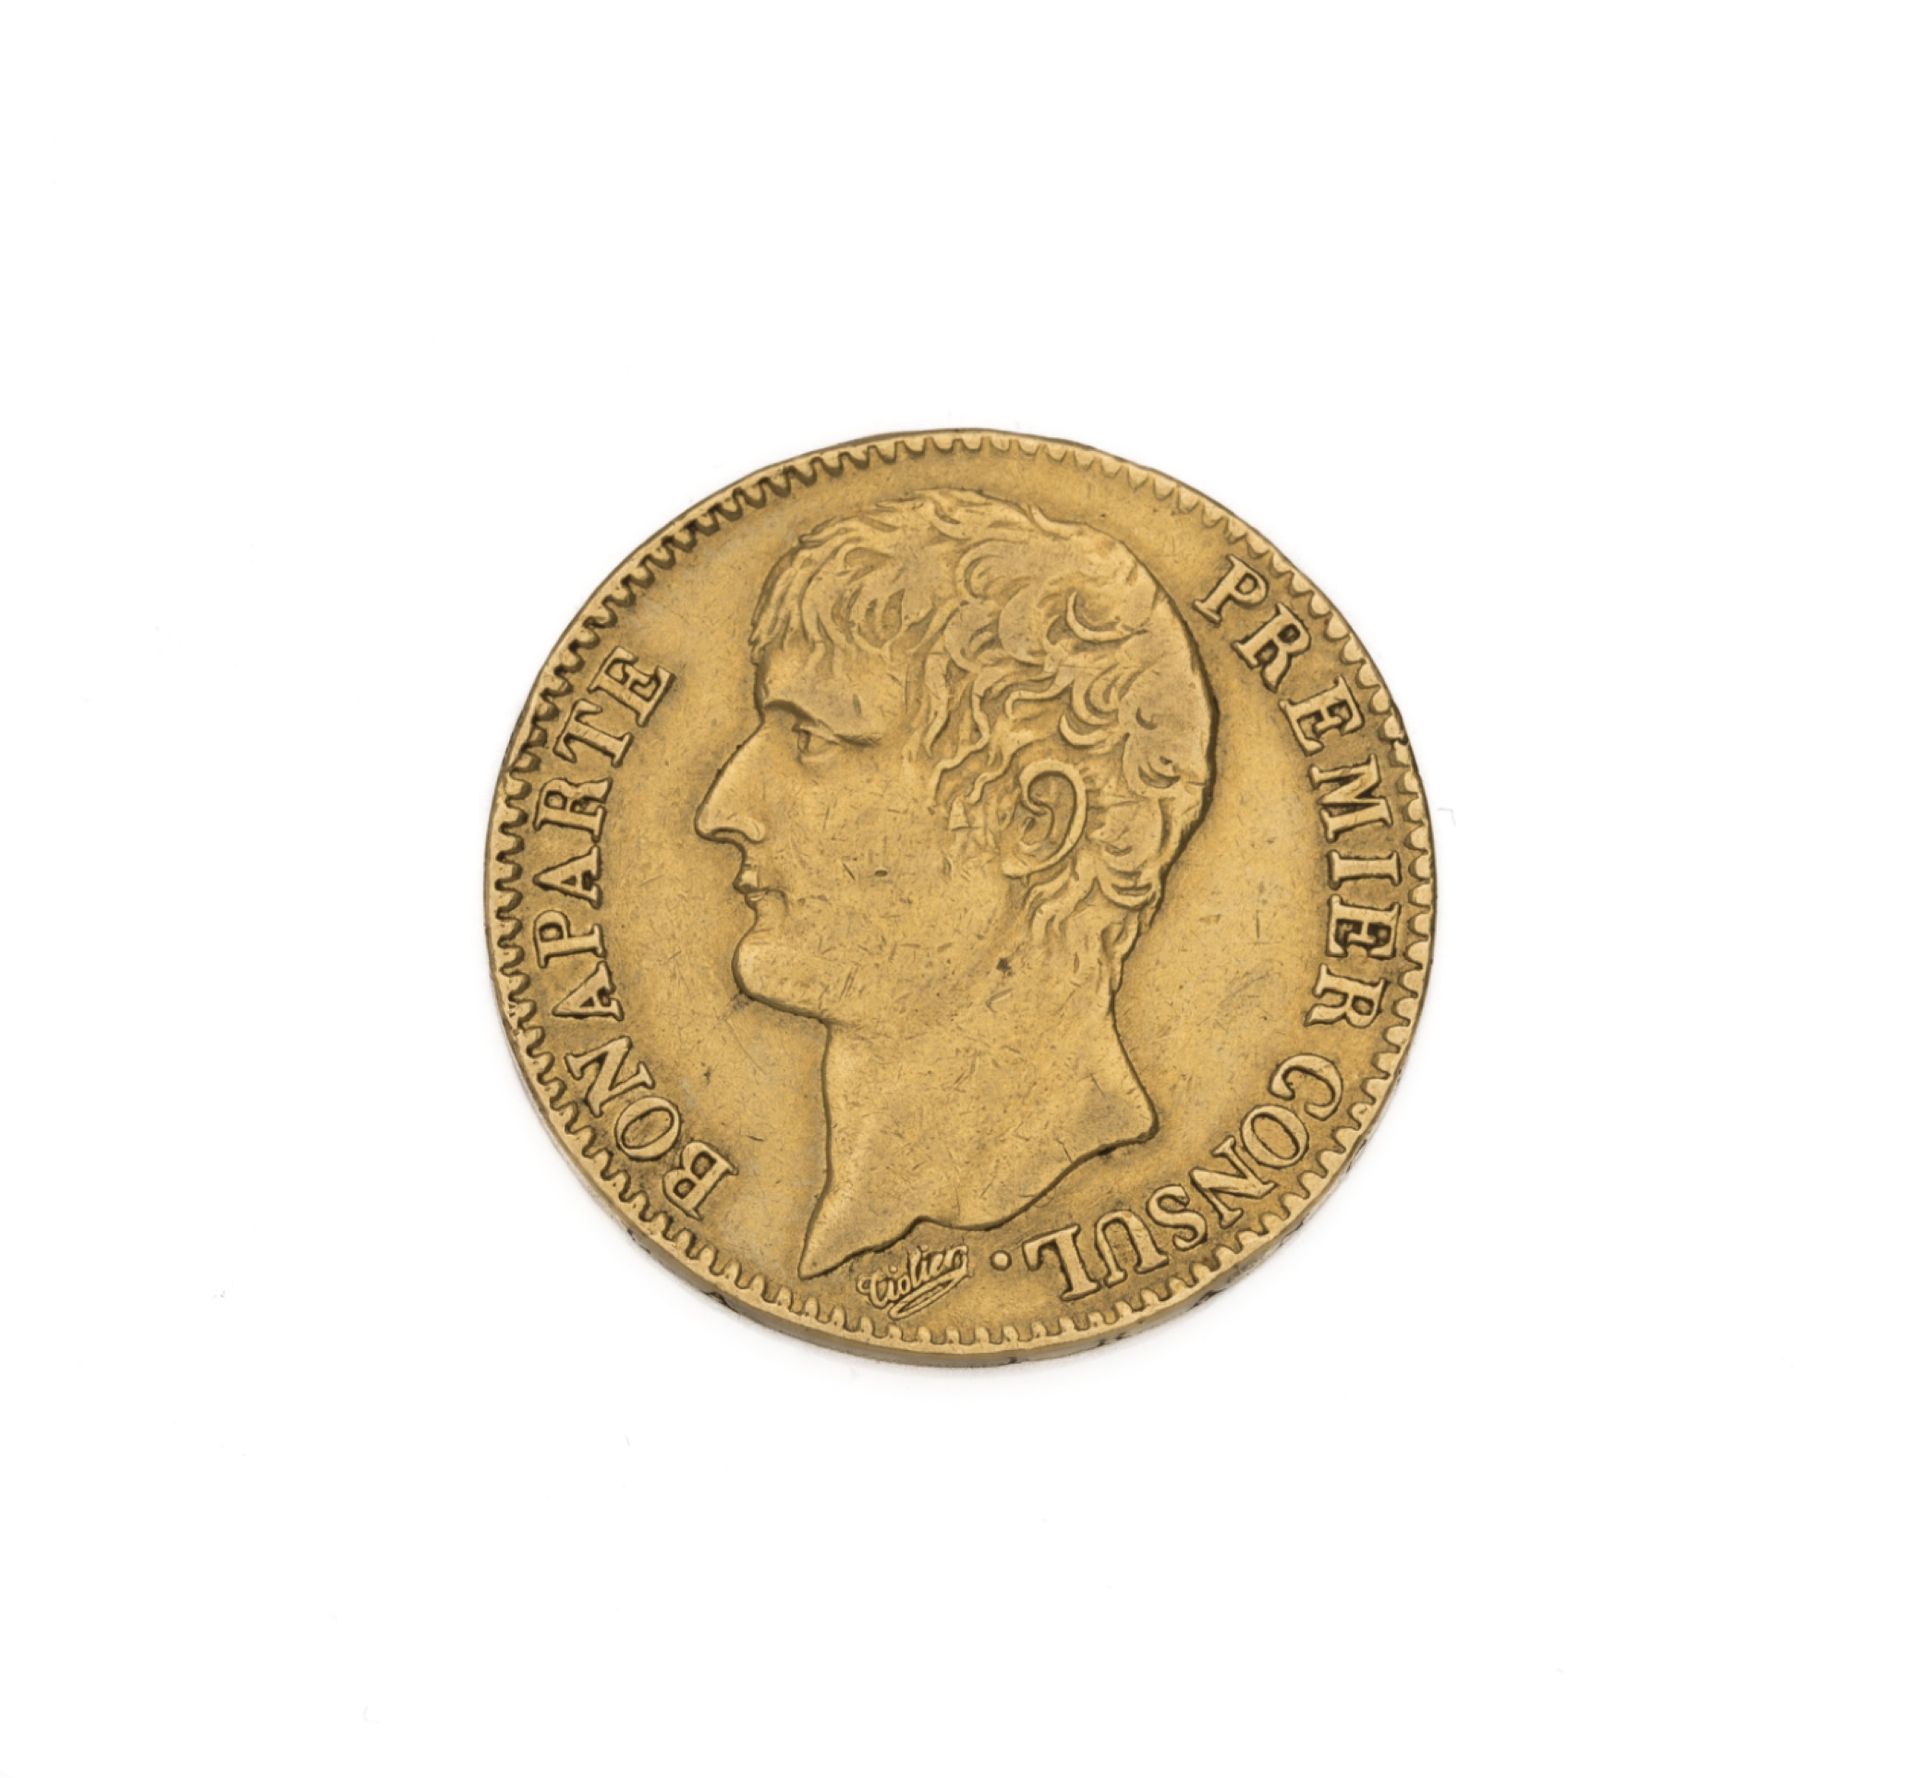 Null PREMIER CONSUL
40 Goldfranken, Napoleon Bonaparte mit nacktem Kopf. Jahr 12&hellip;